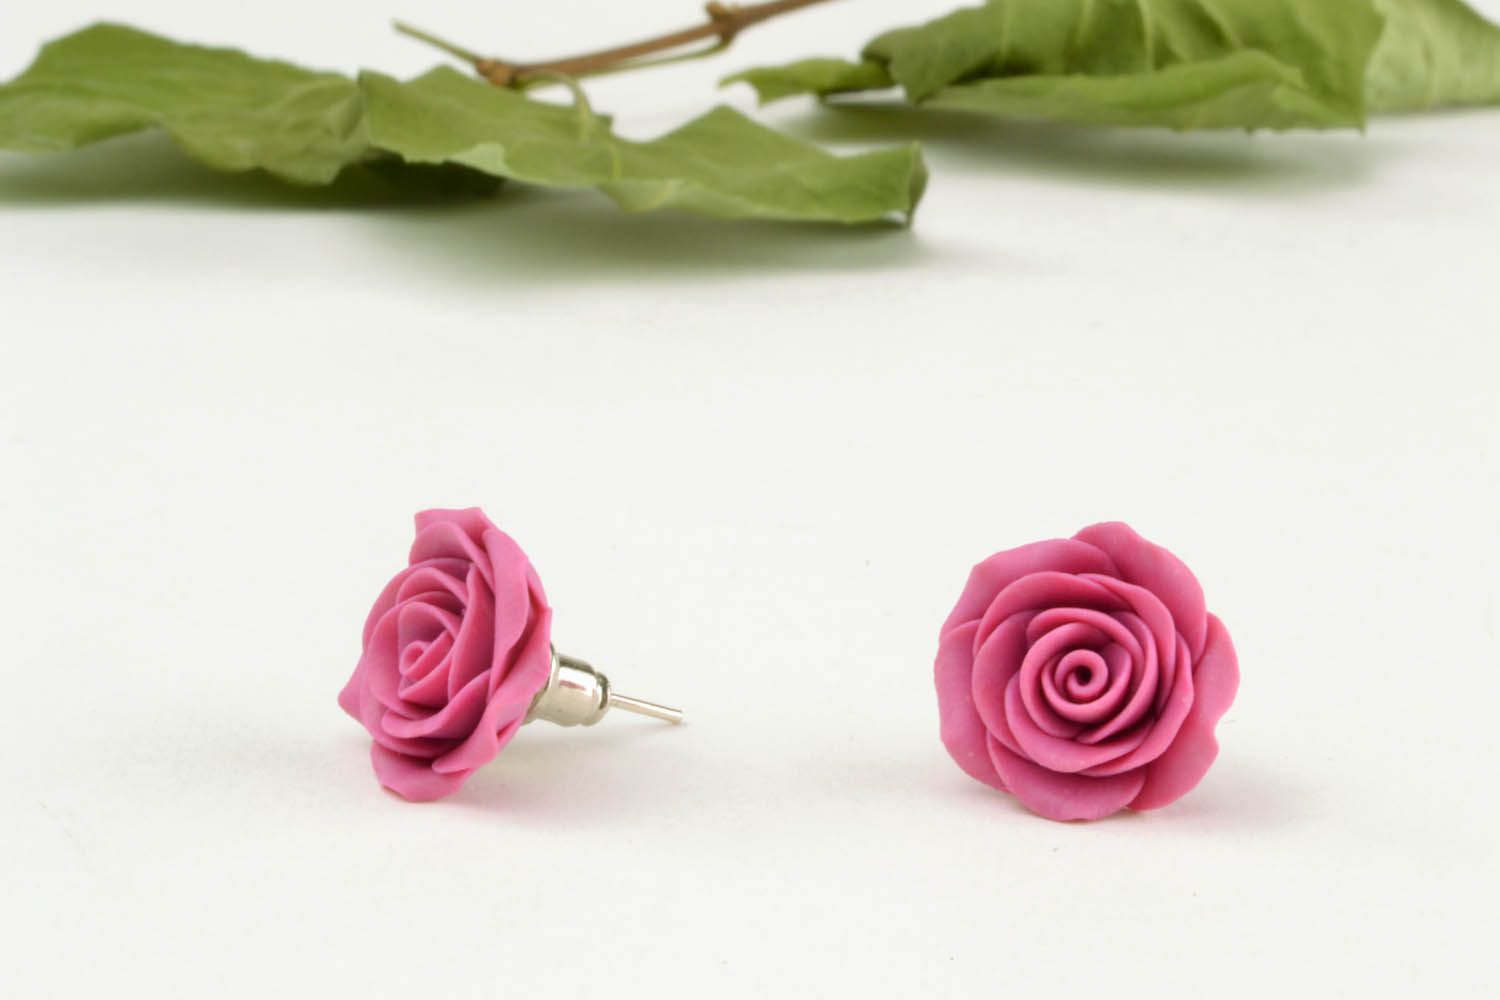 Homemade clay earrings Roses photo 1